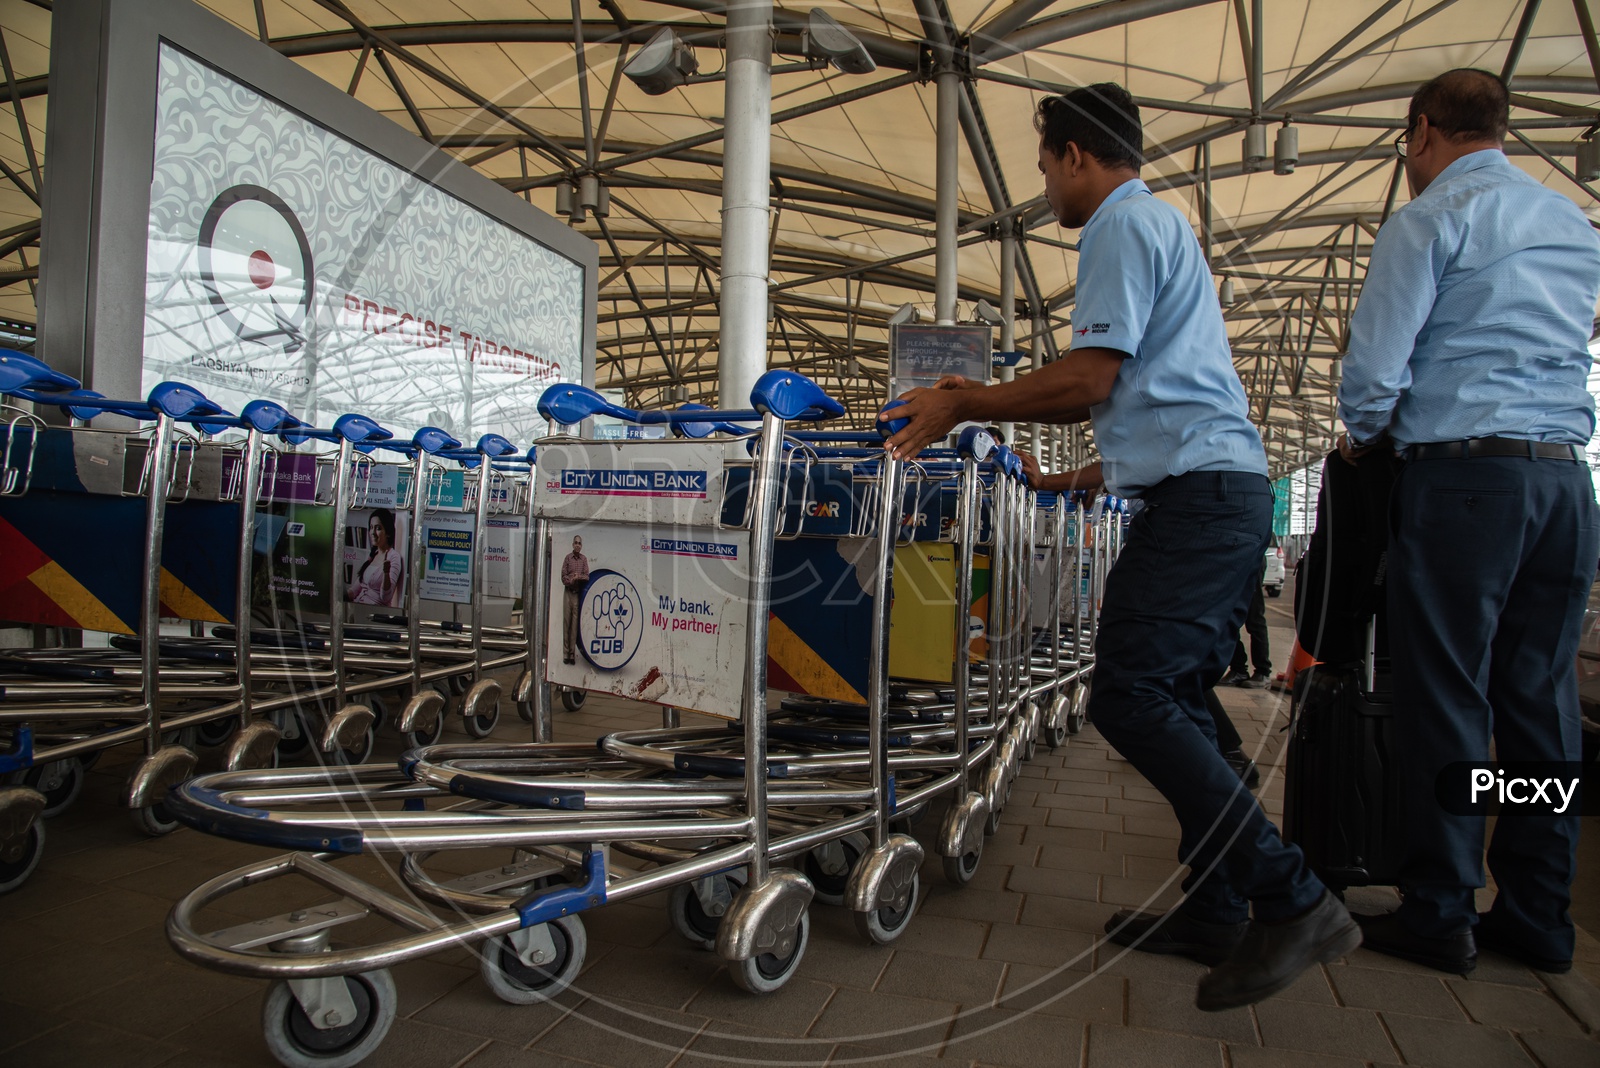 Baggage/Luggage Trolley, Rajiv Gandhi International Airport (HYD)